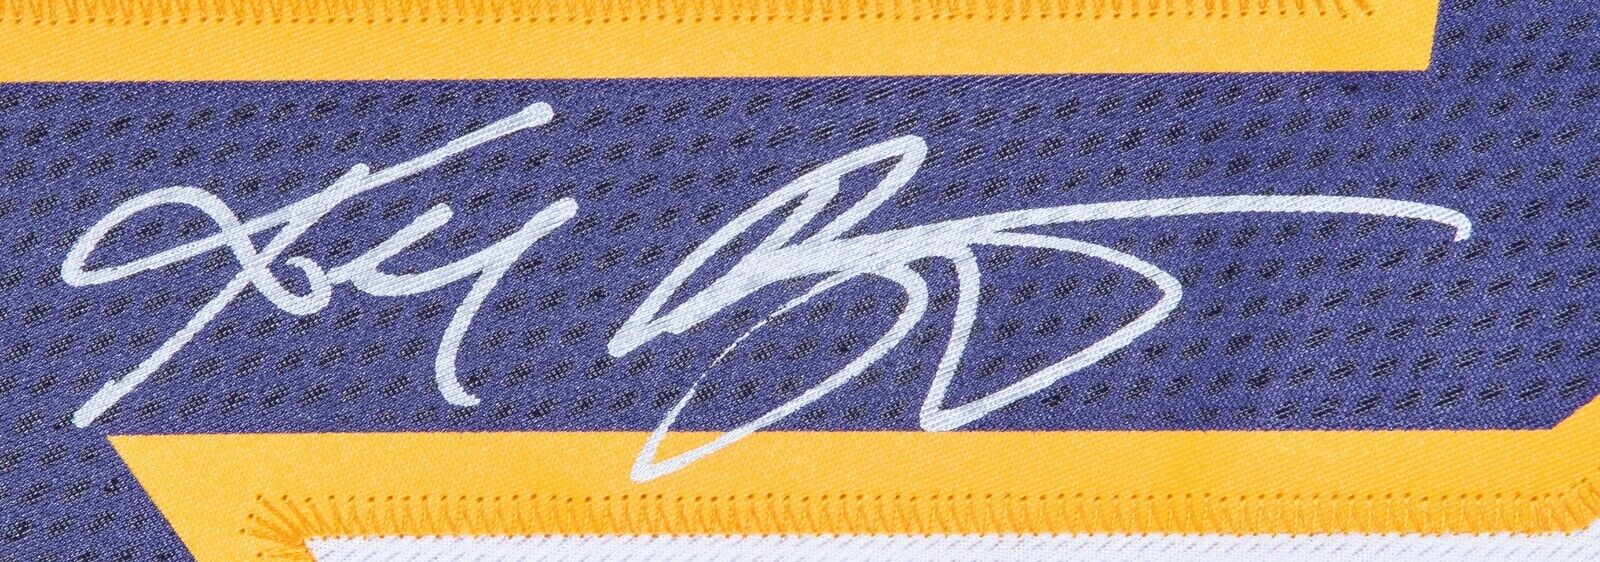 Mamba Kobe Bryant Autographed Lakers Snake Skin Jersey Hand Signed Coa